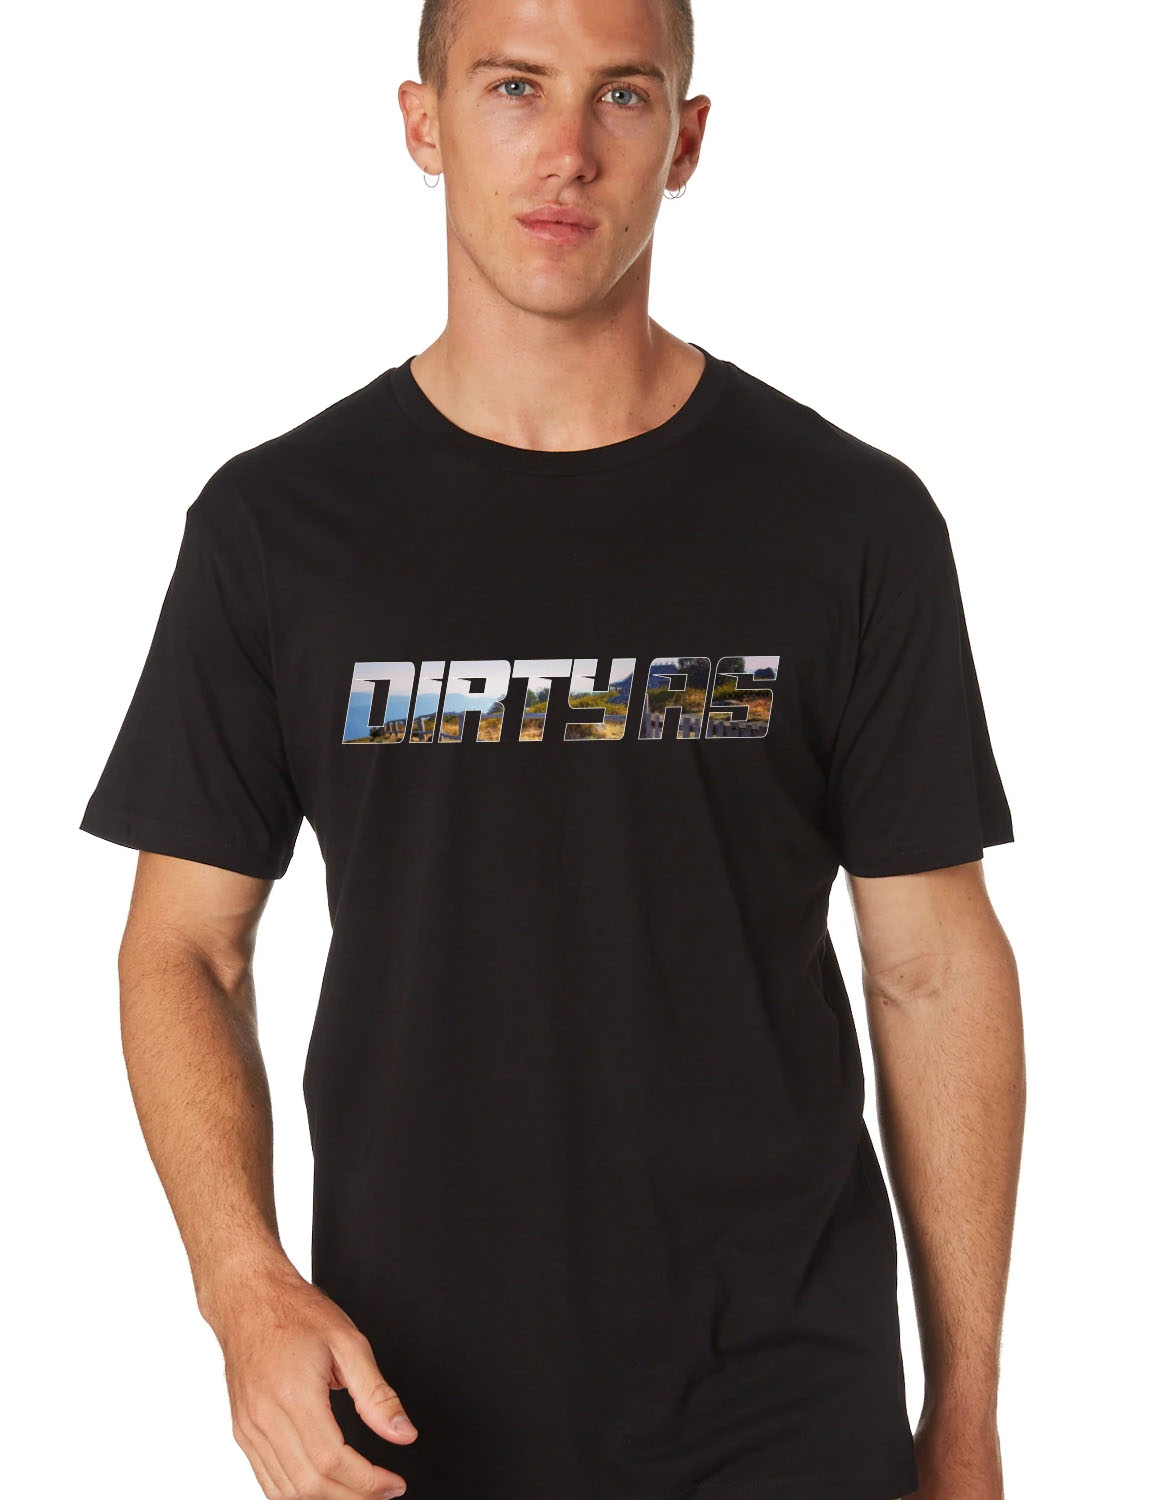 Dirty As Clothing: Dirty As T-Shirt | The T-Shirt Shop